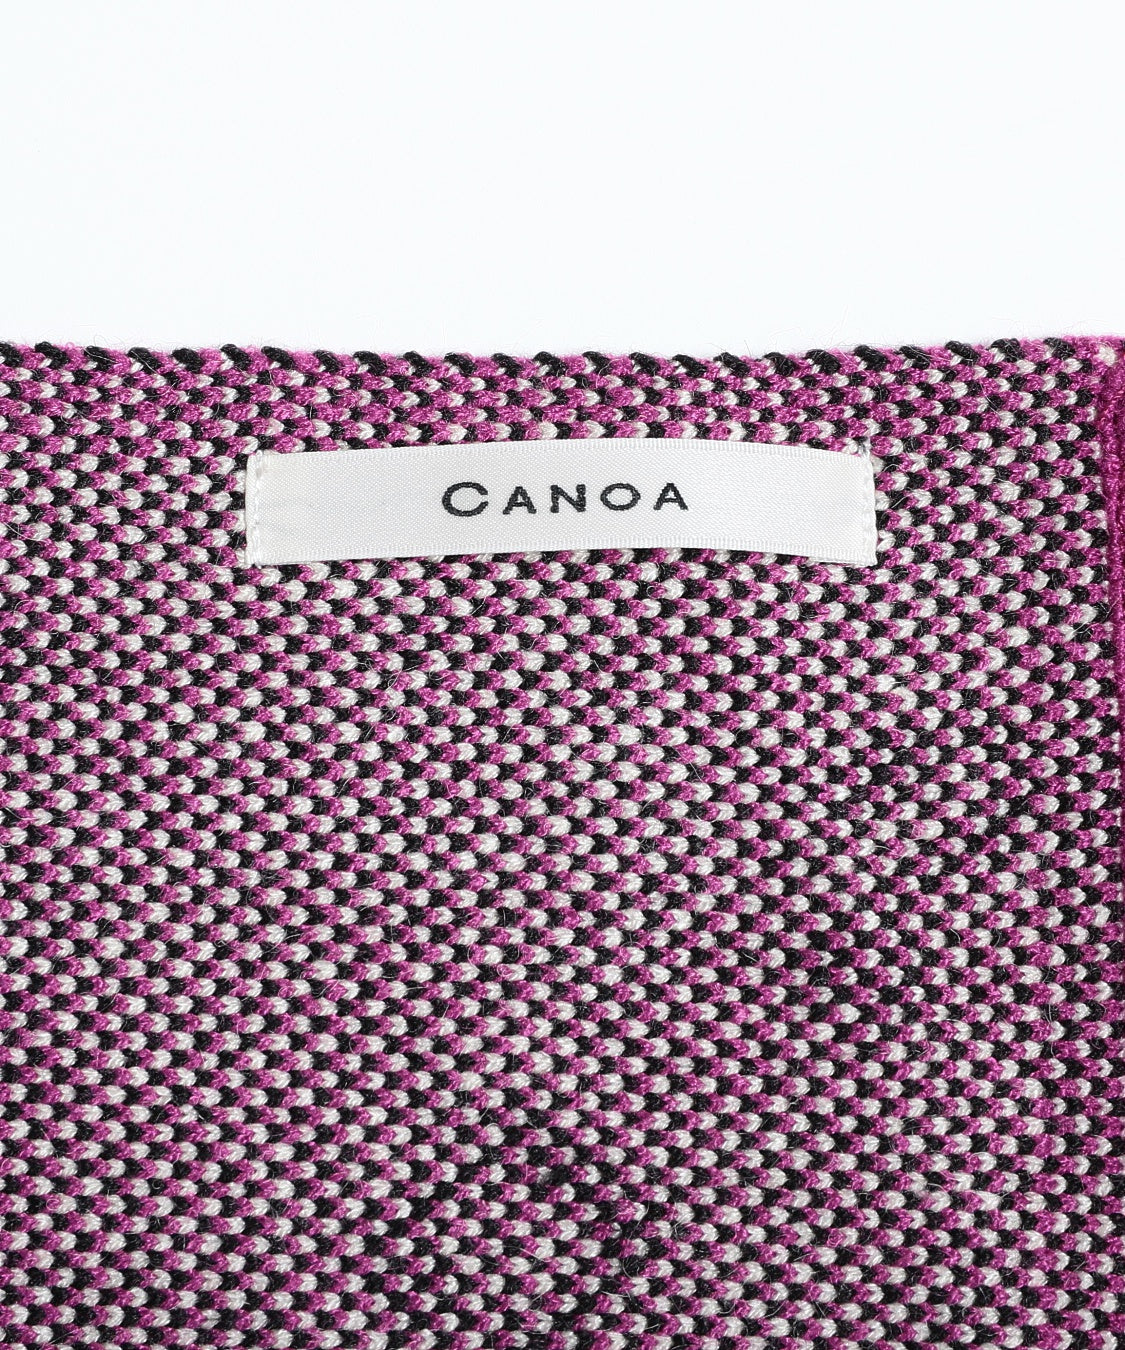  CANOA(カノア) ♪カノンちゃんニットスカーフ